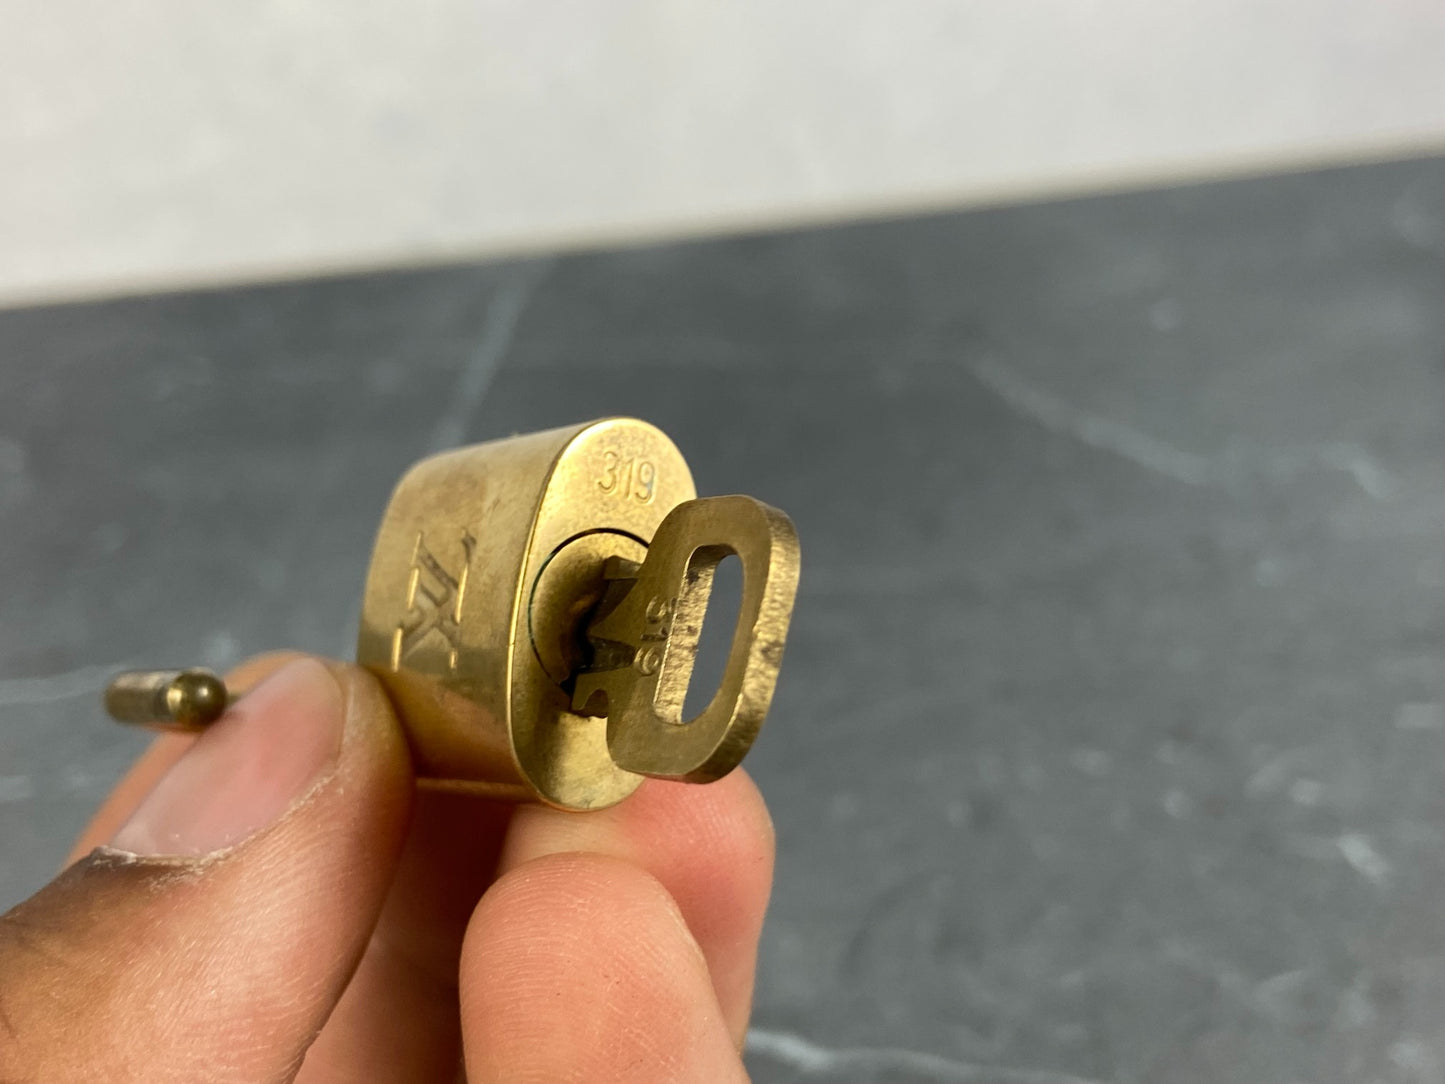 Louis Vuitton Lock Gold Tone No. 319